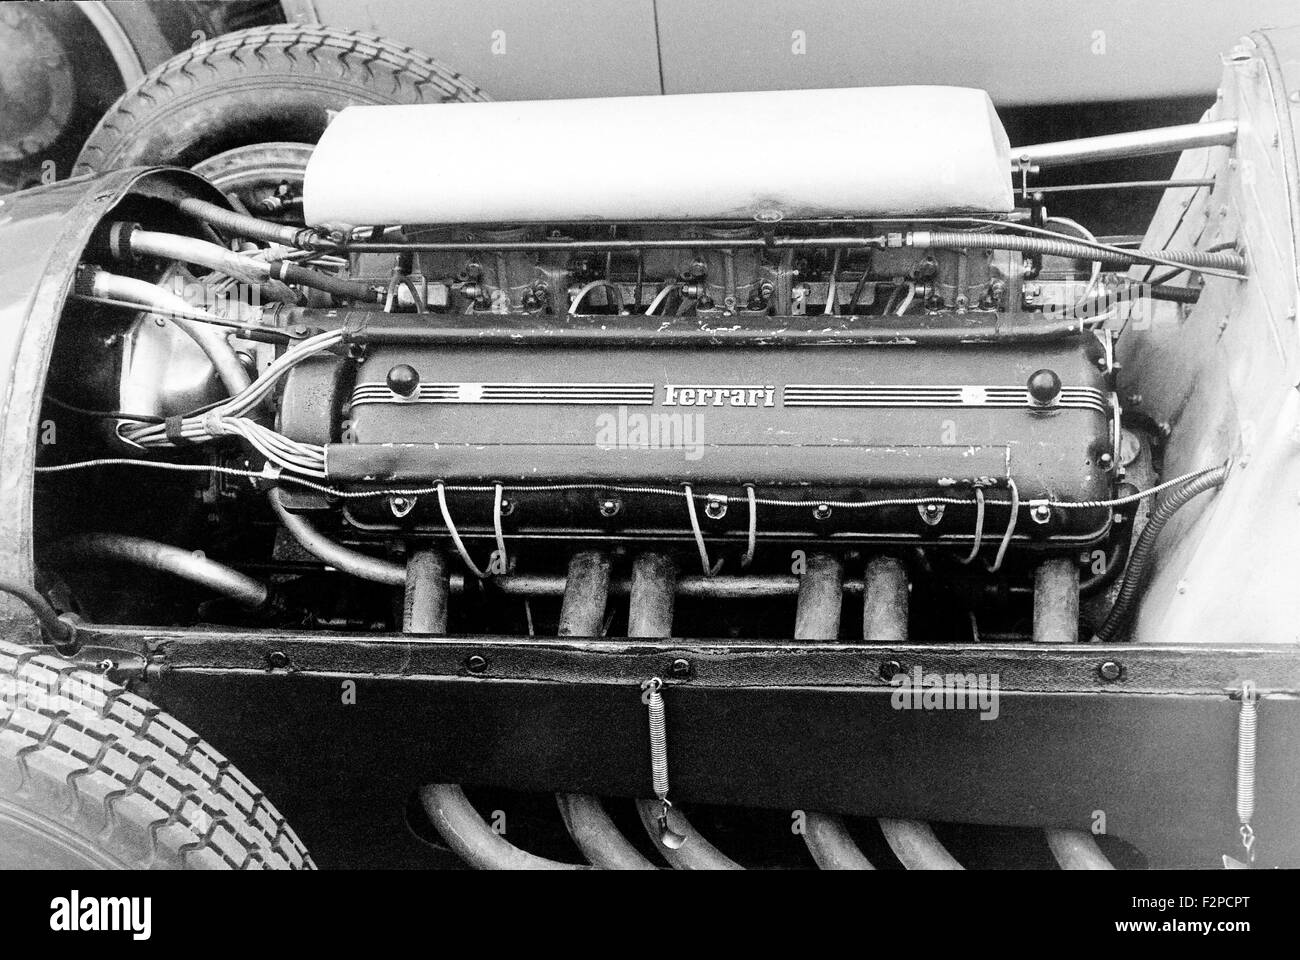 1951 Ferrari 375 engine Stock Photo